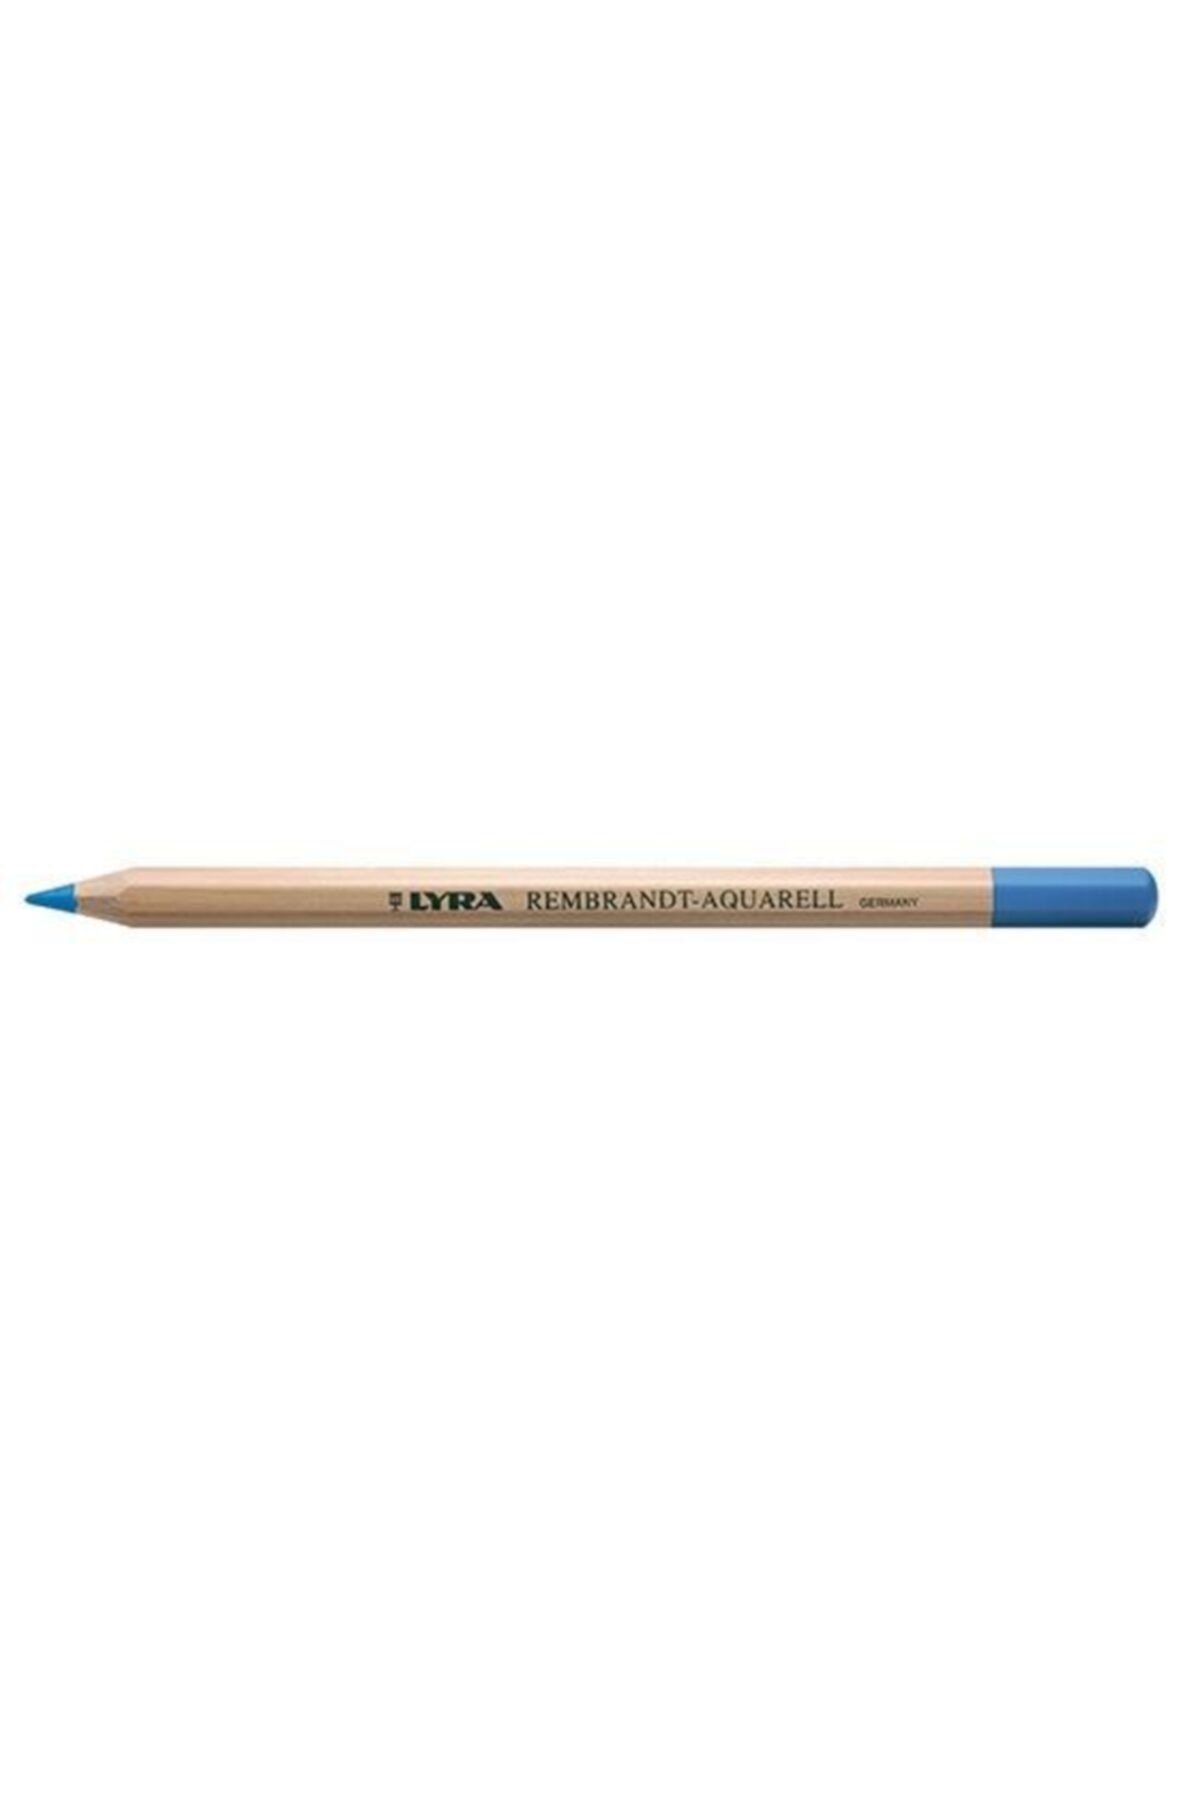 Lyra مداد رنگی رامبراند آکوارل DEEP COBALT L2010043